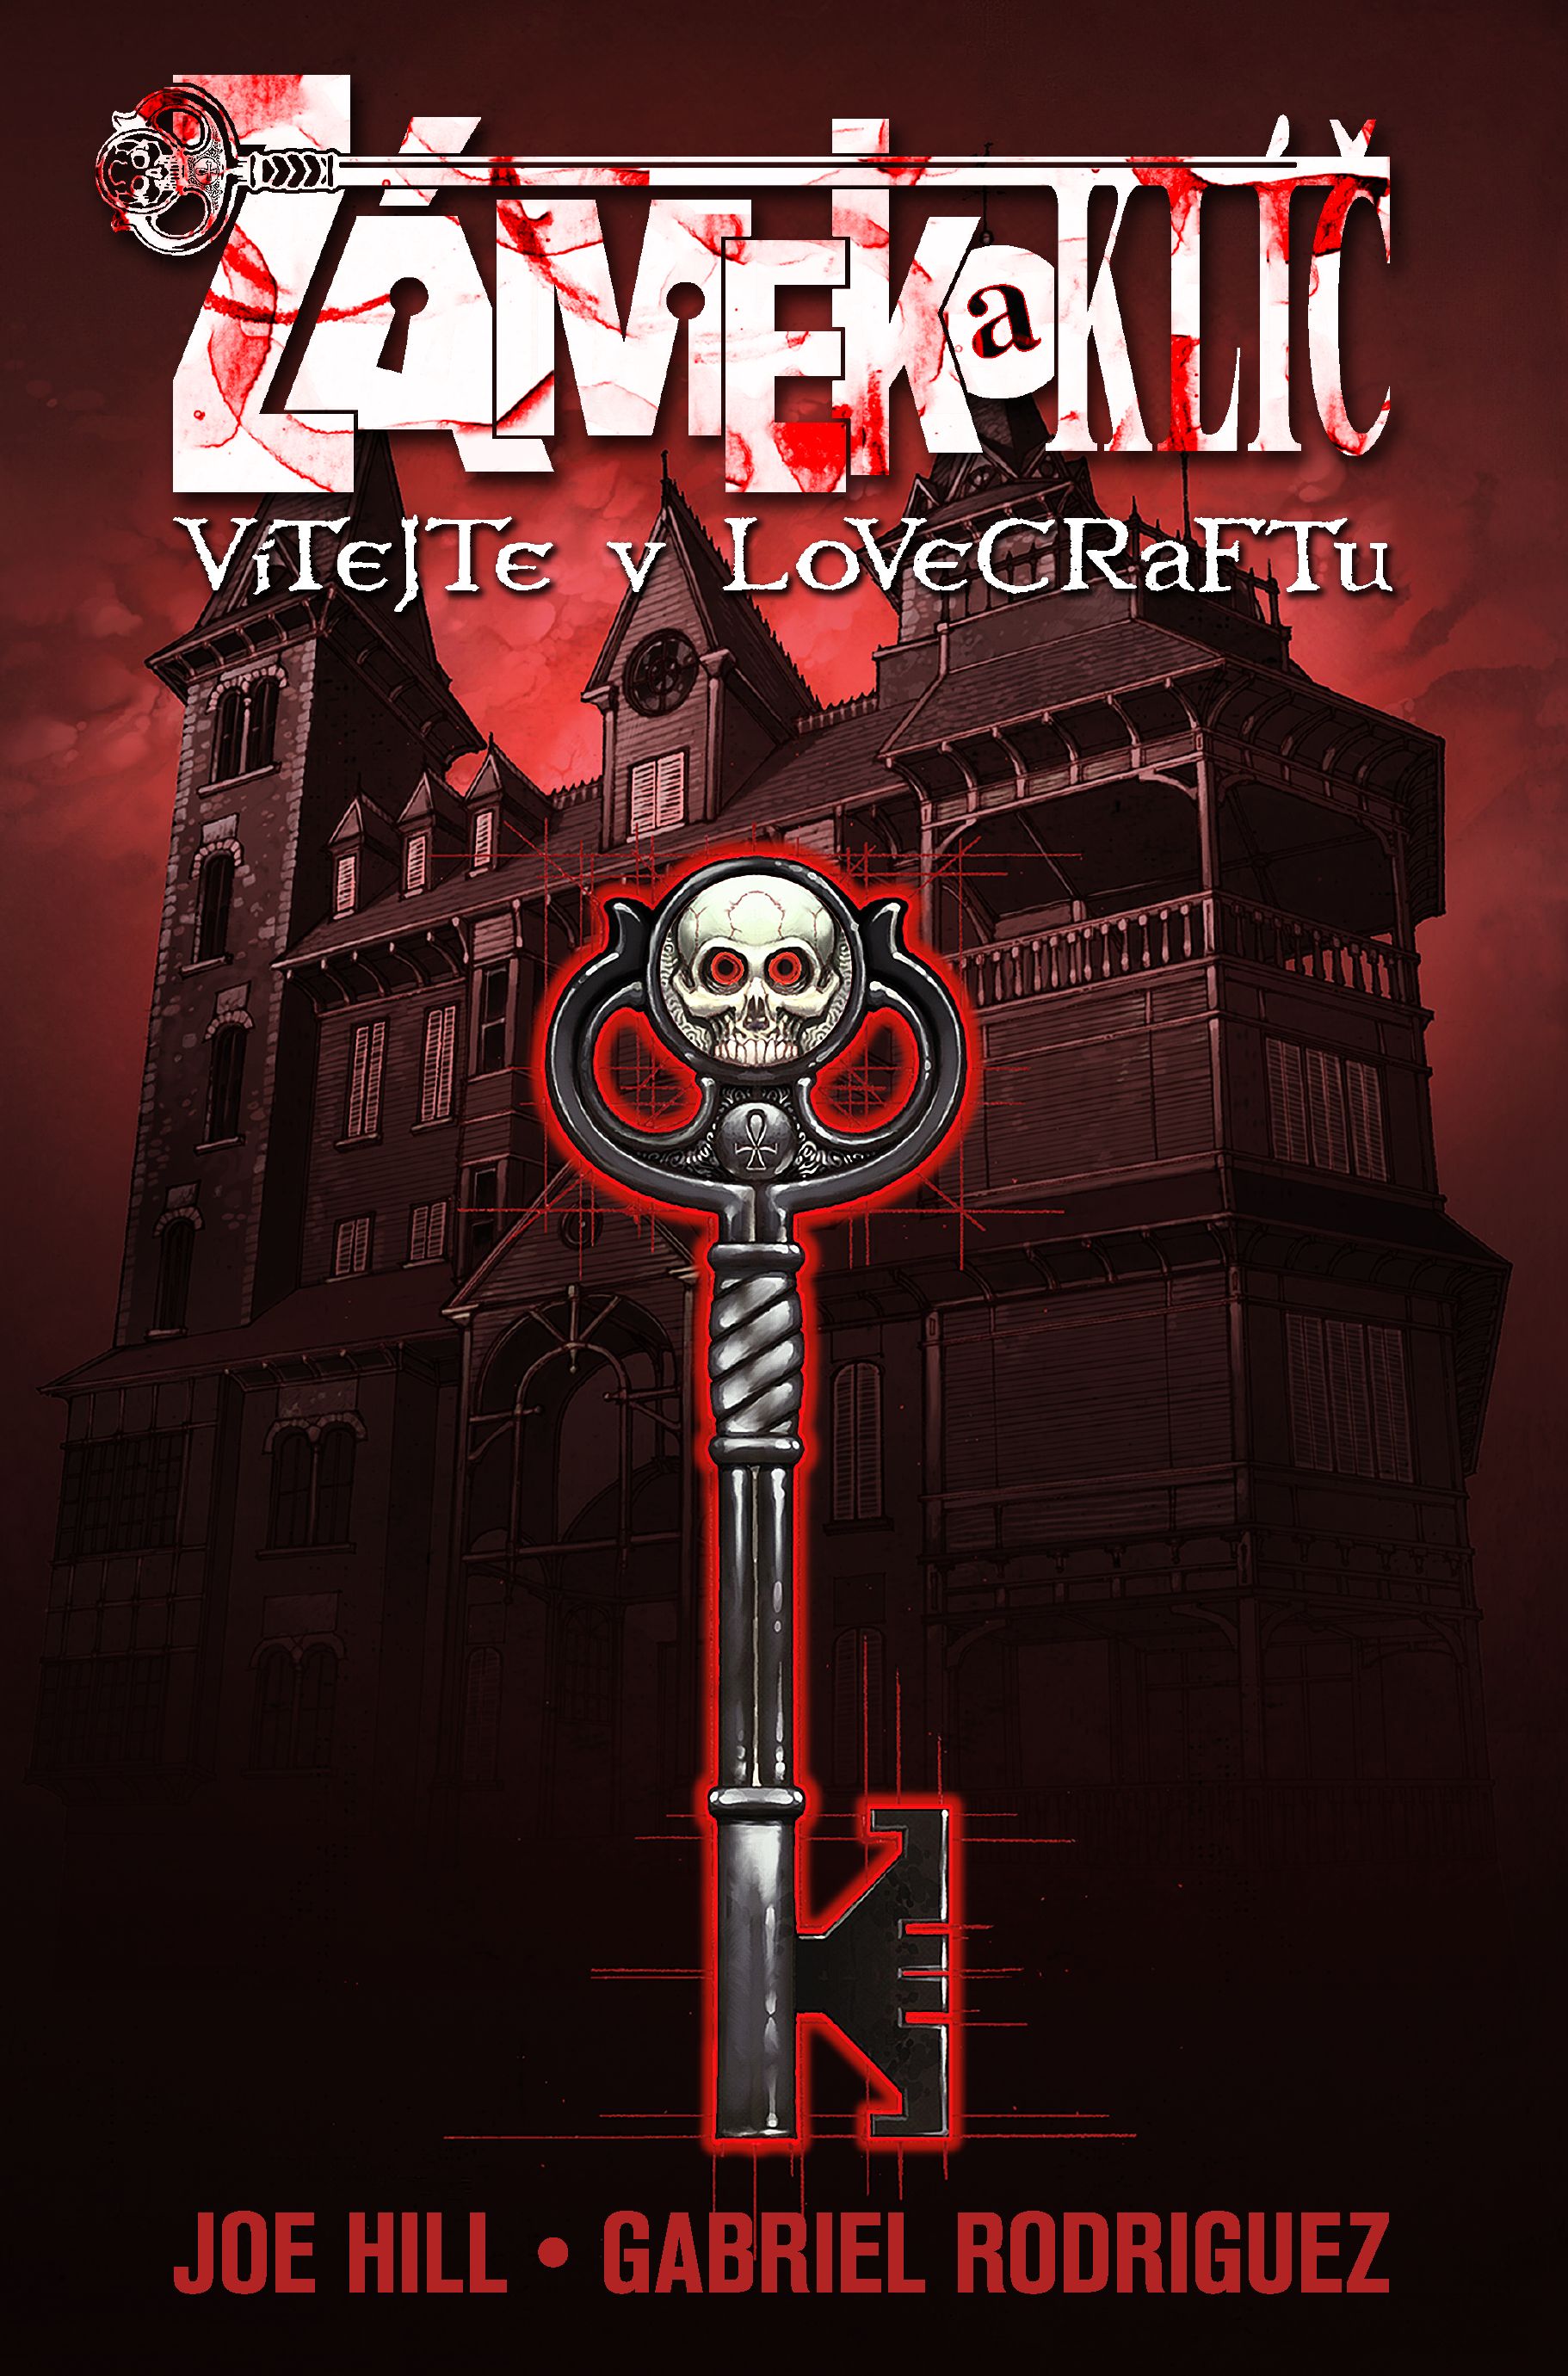 Locke And Key Vol. 1 - Welcome to Lovecraft | Joe Hill, Gabriel Rodriguez